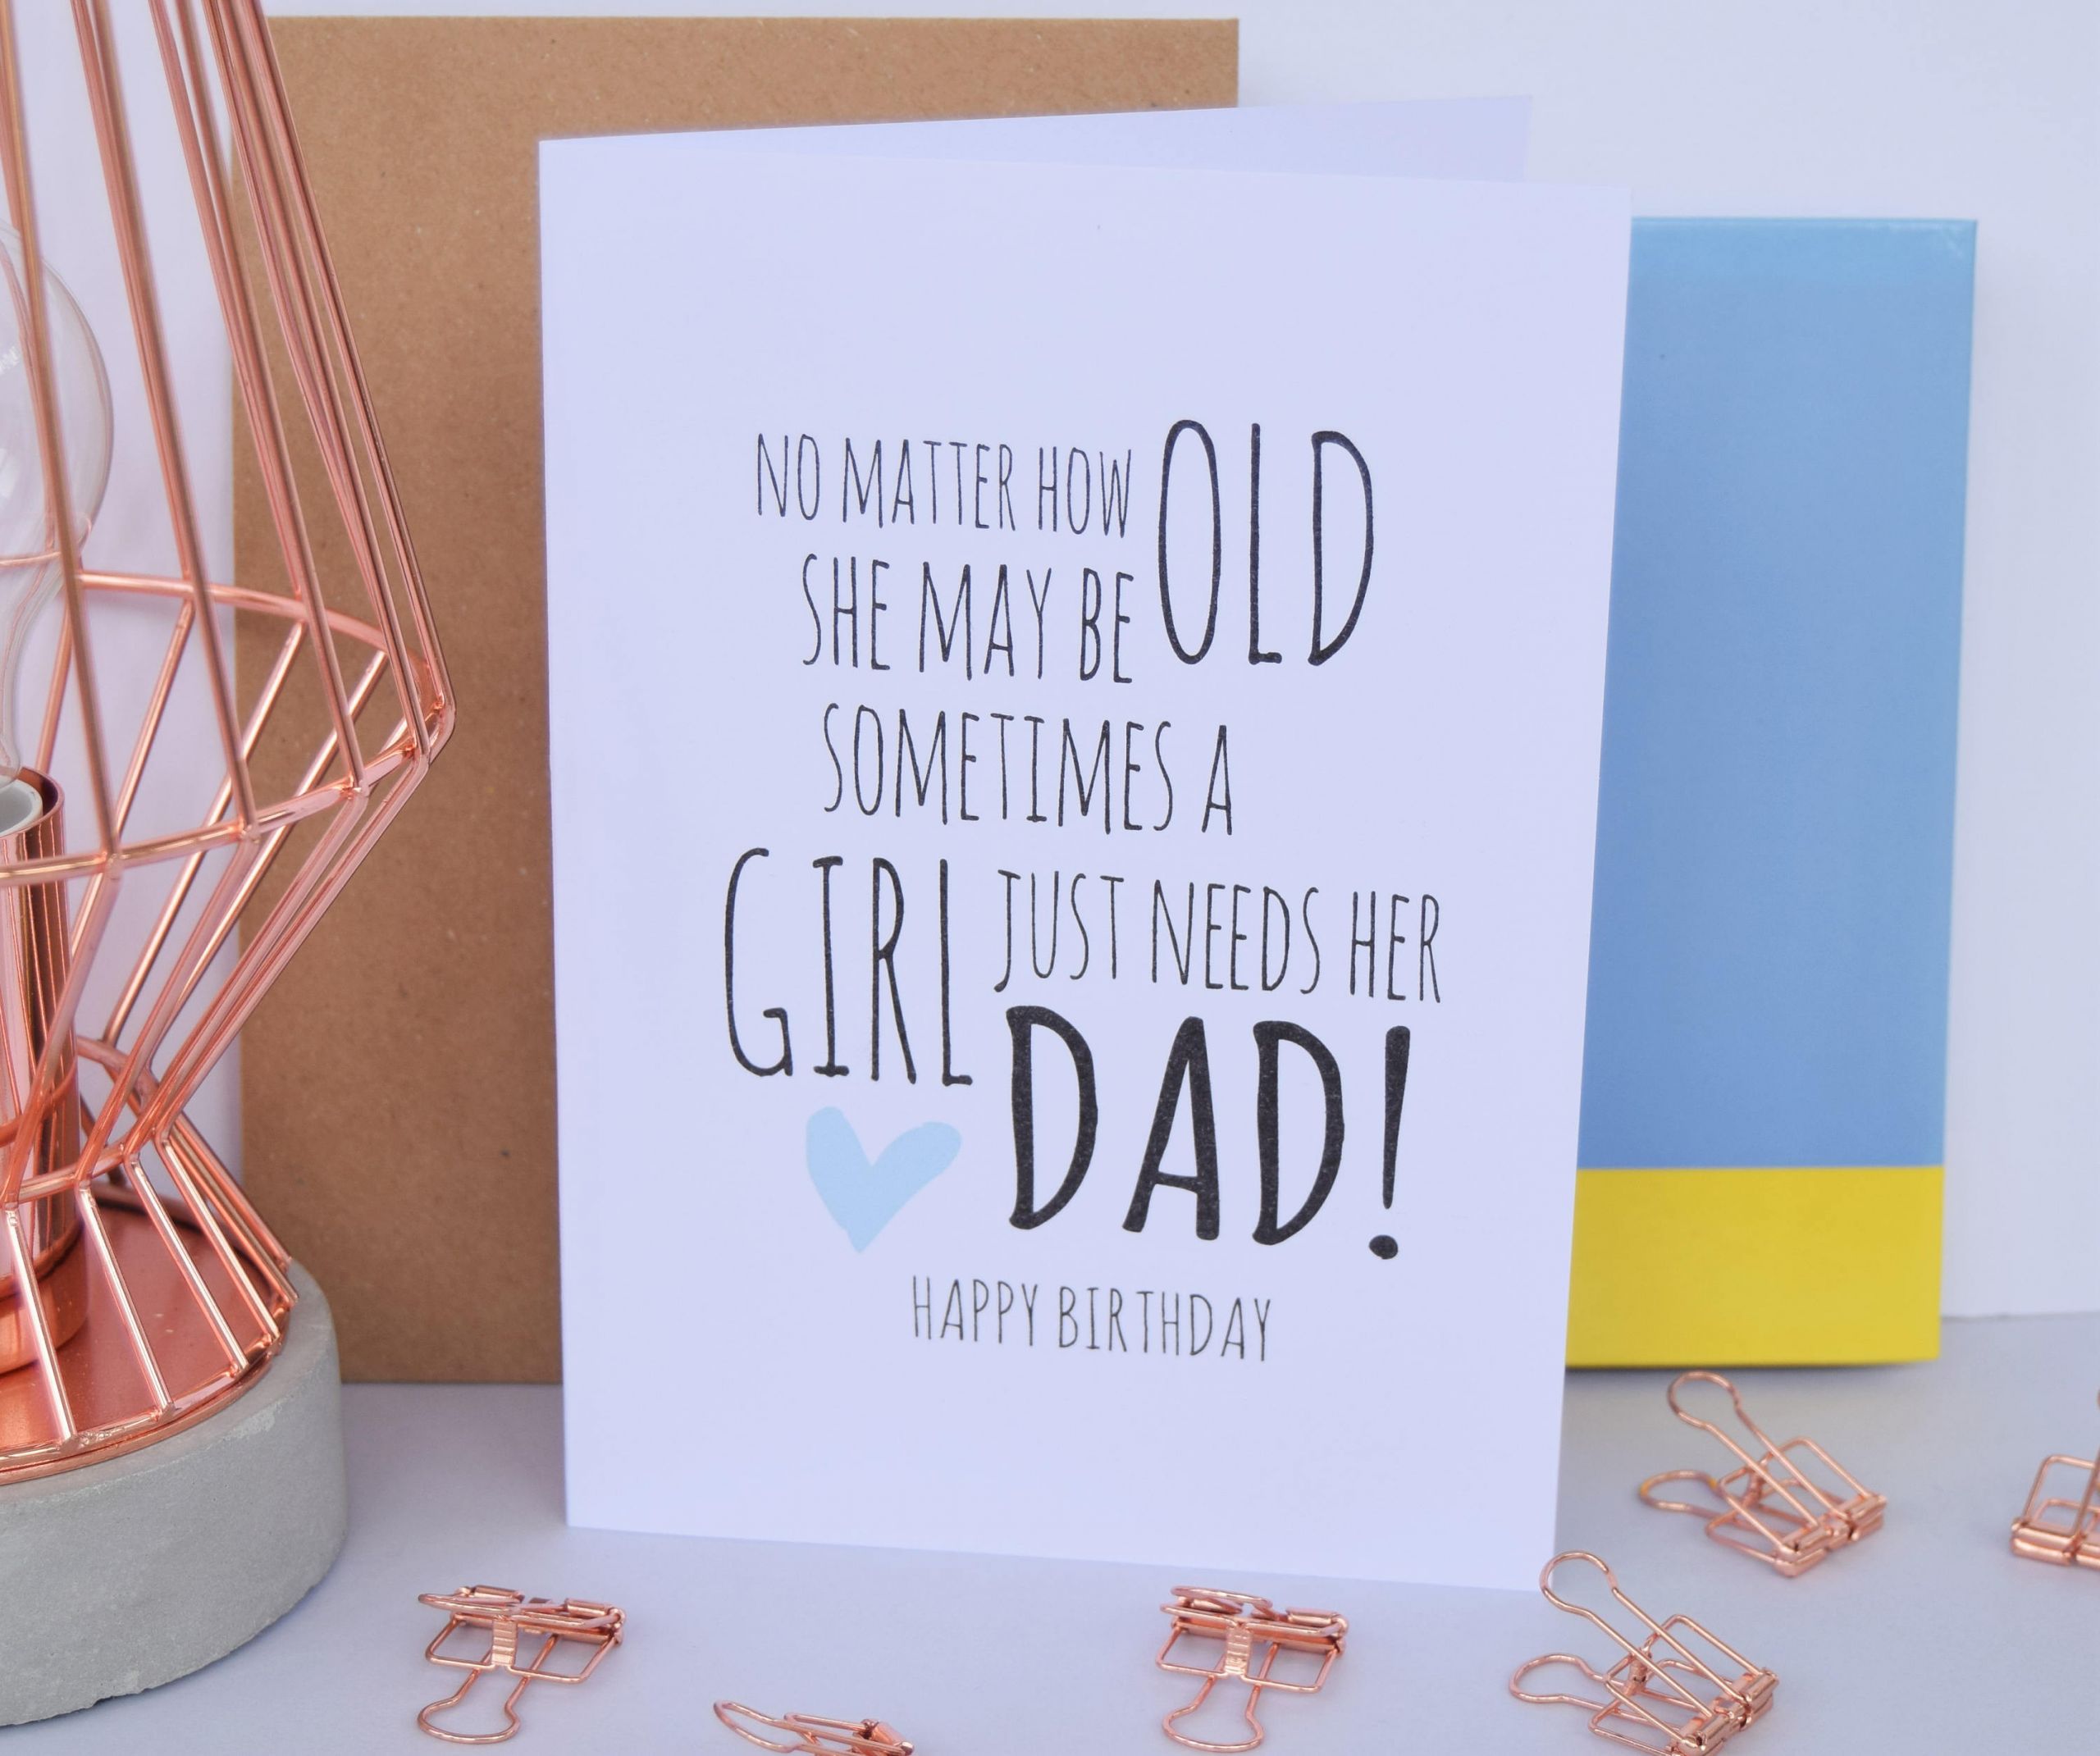 Dad Birthday Cards
 Dad Birthday Card A Girl Just Needs Her Dad Daughter Dad